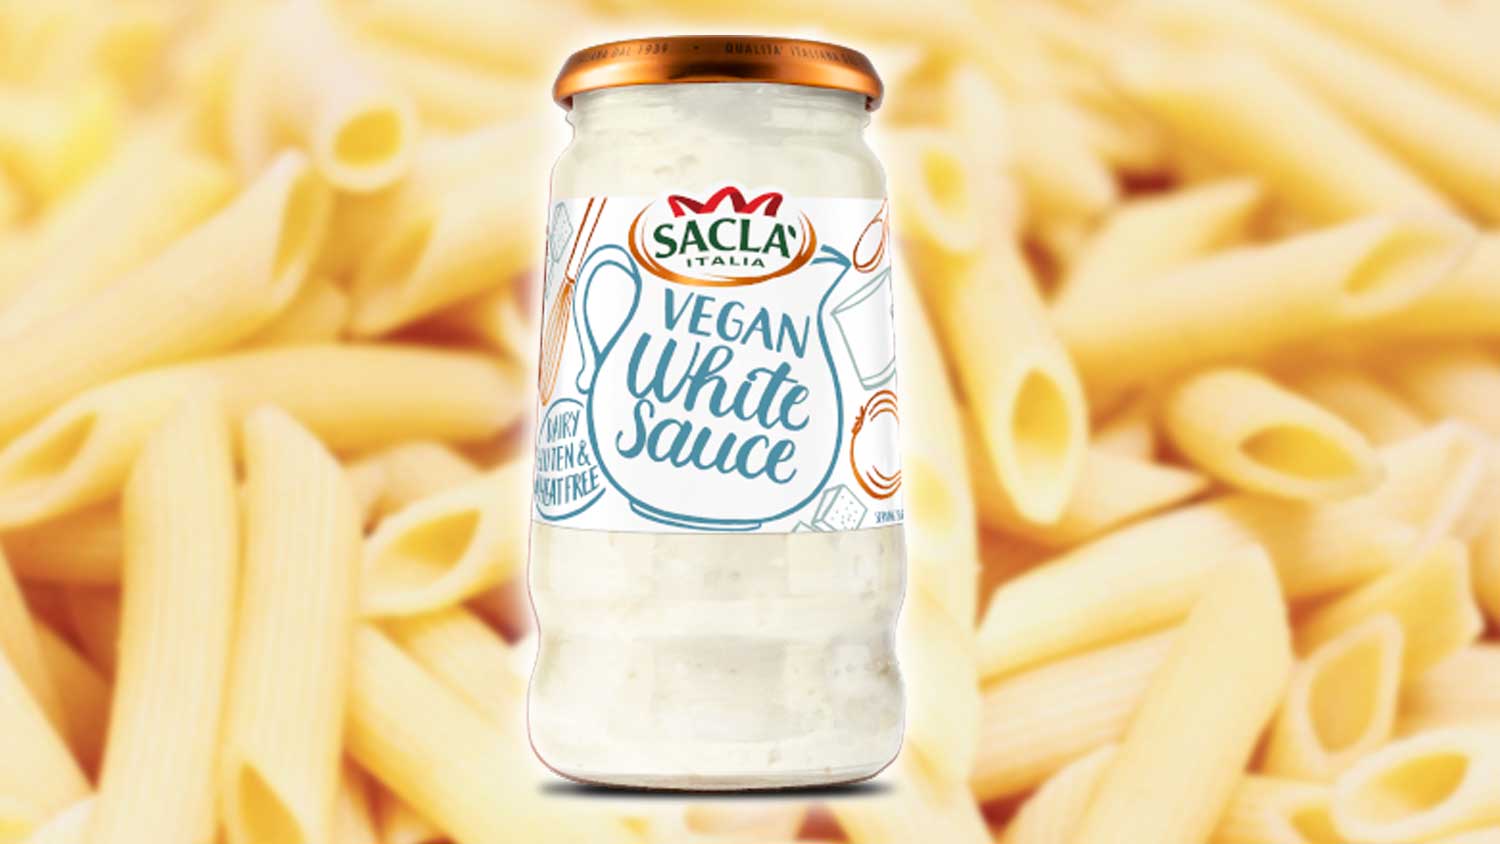 Sacla Has Vegan Cheese and White Pasta Sauces Now